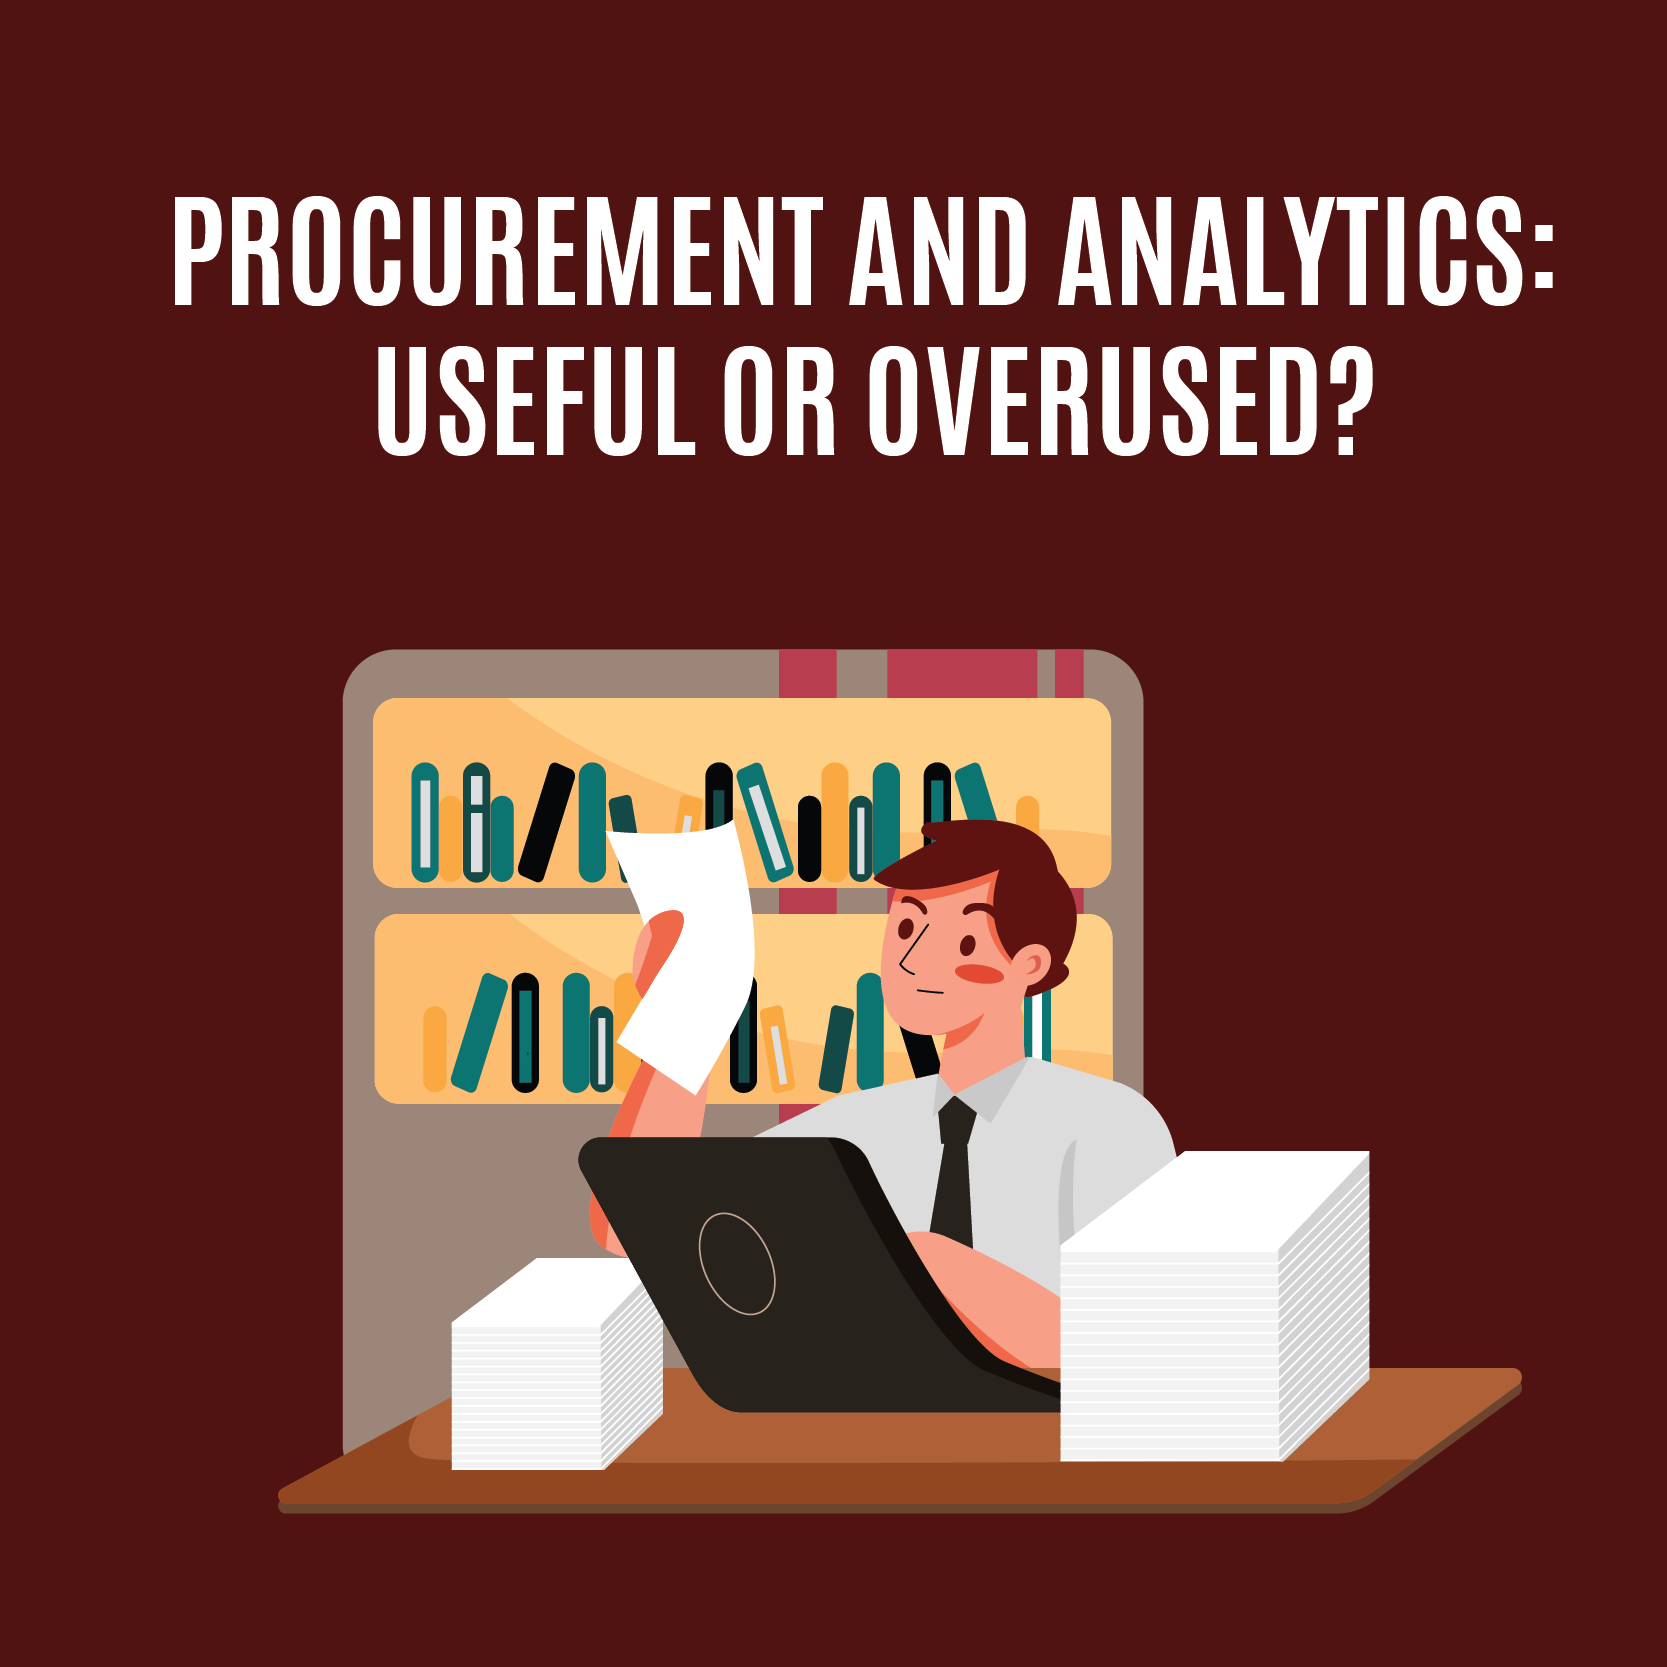 Procurement and analytics